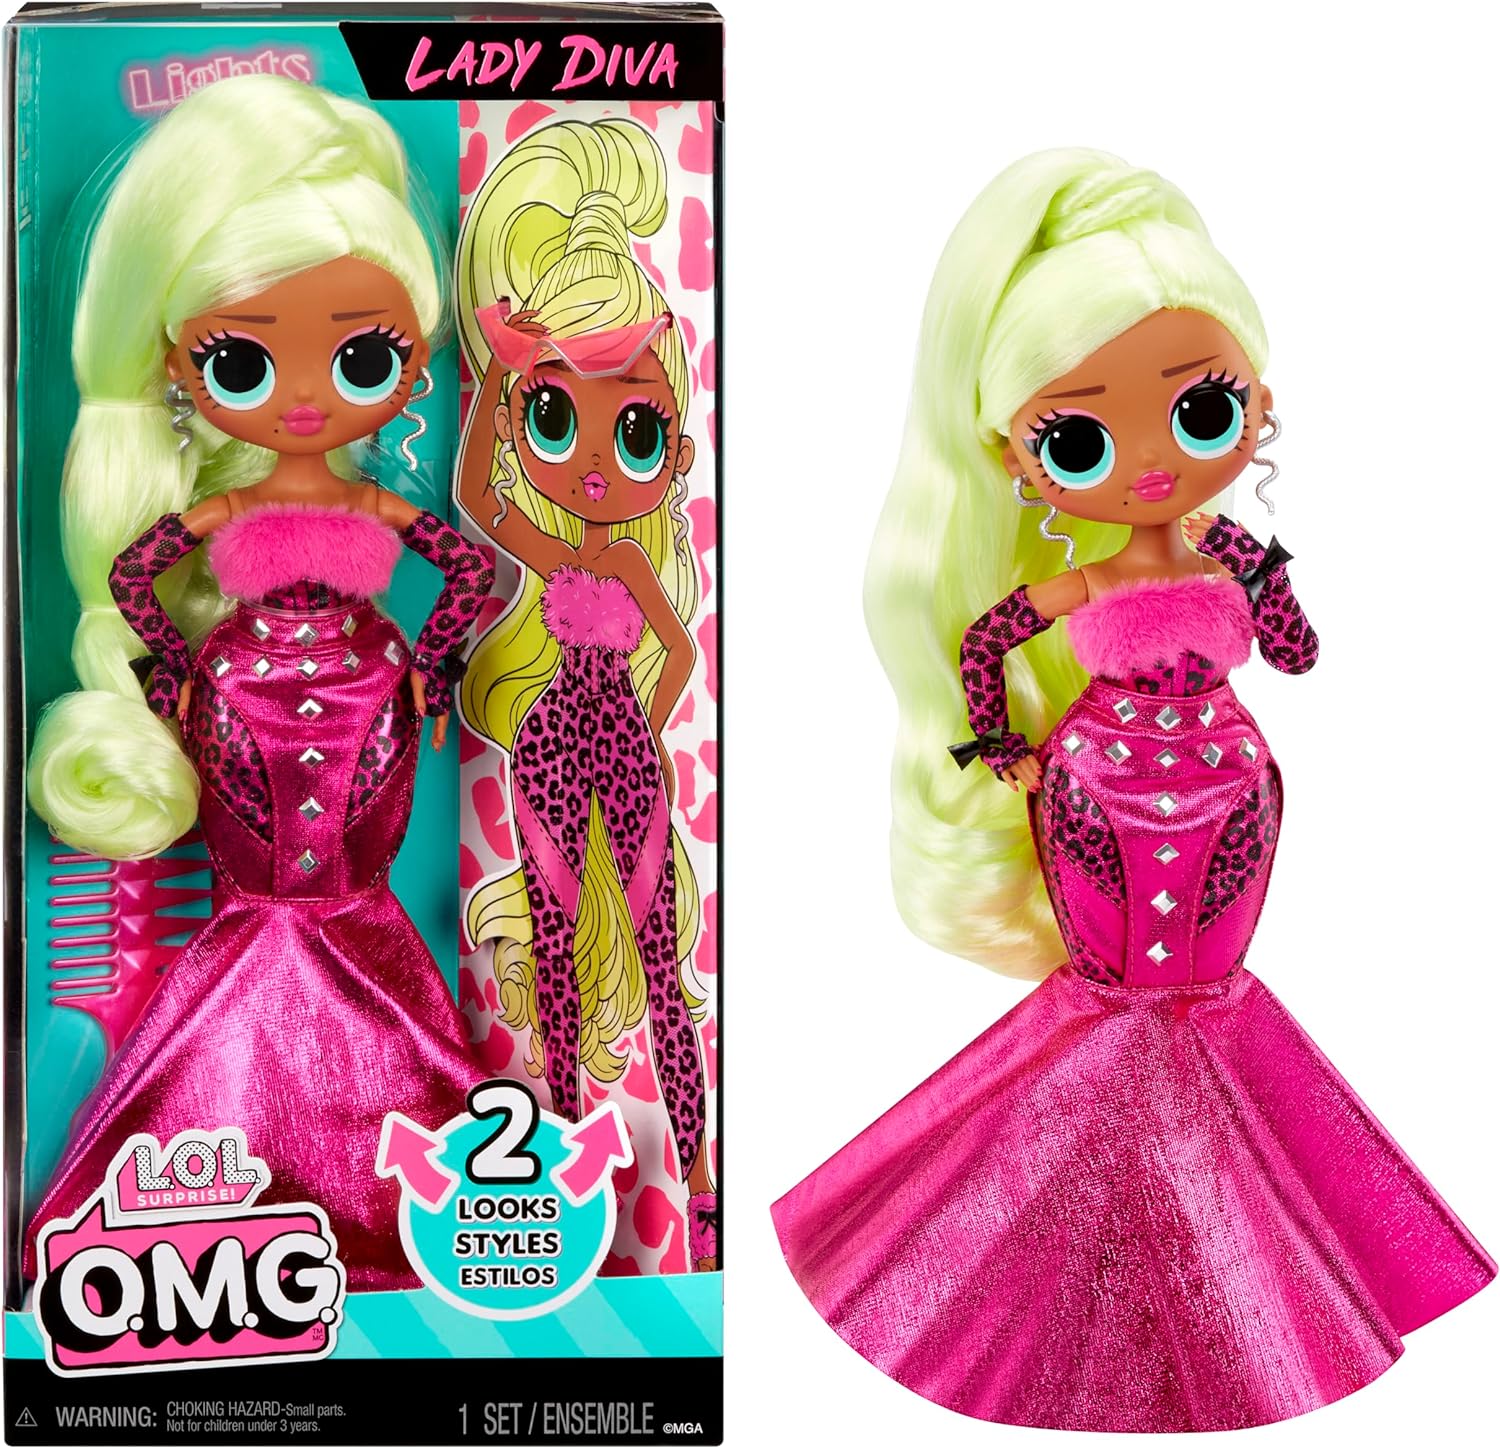 L.O.L. Surprise! O.M.G. Core Doll Series 1 Swag Fashion Doll